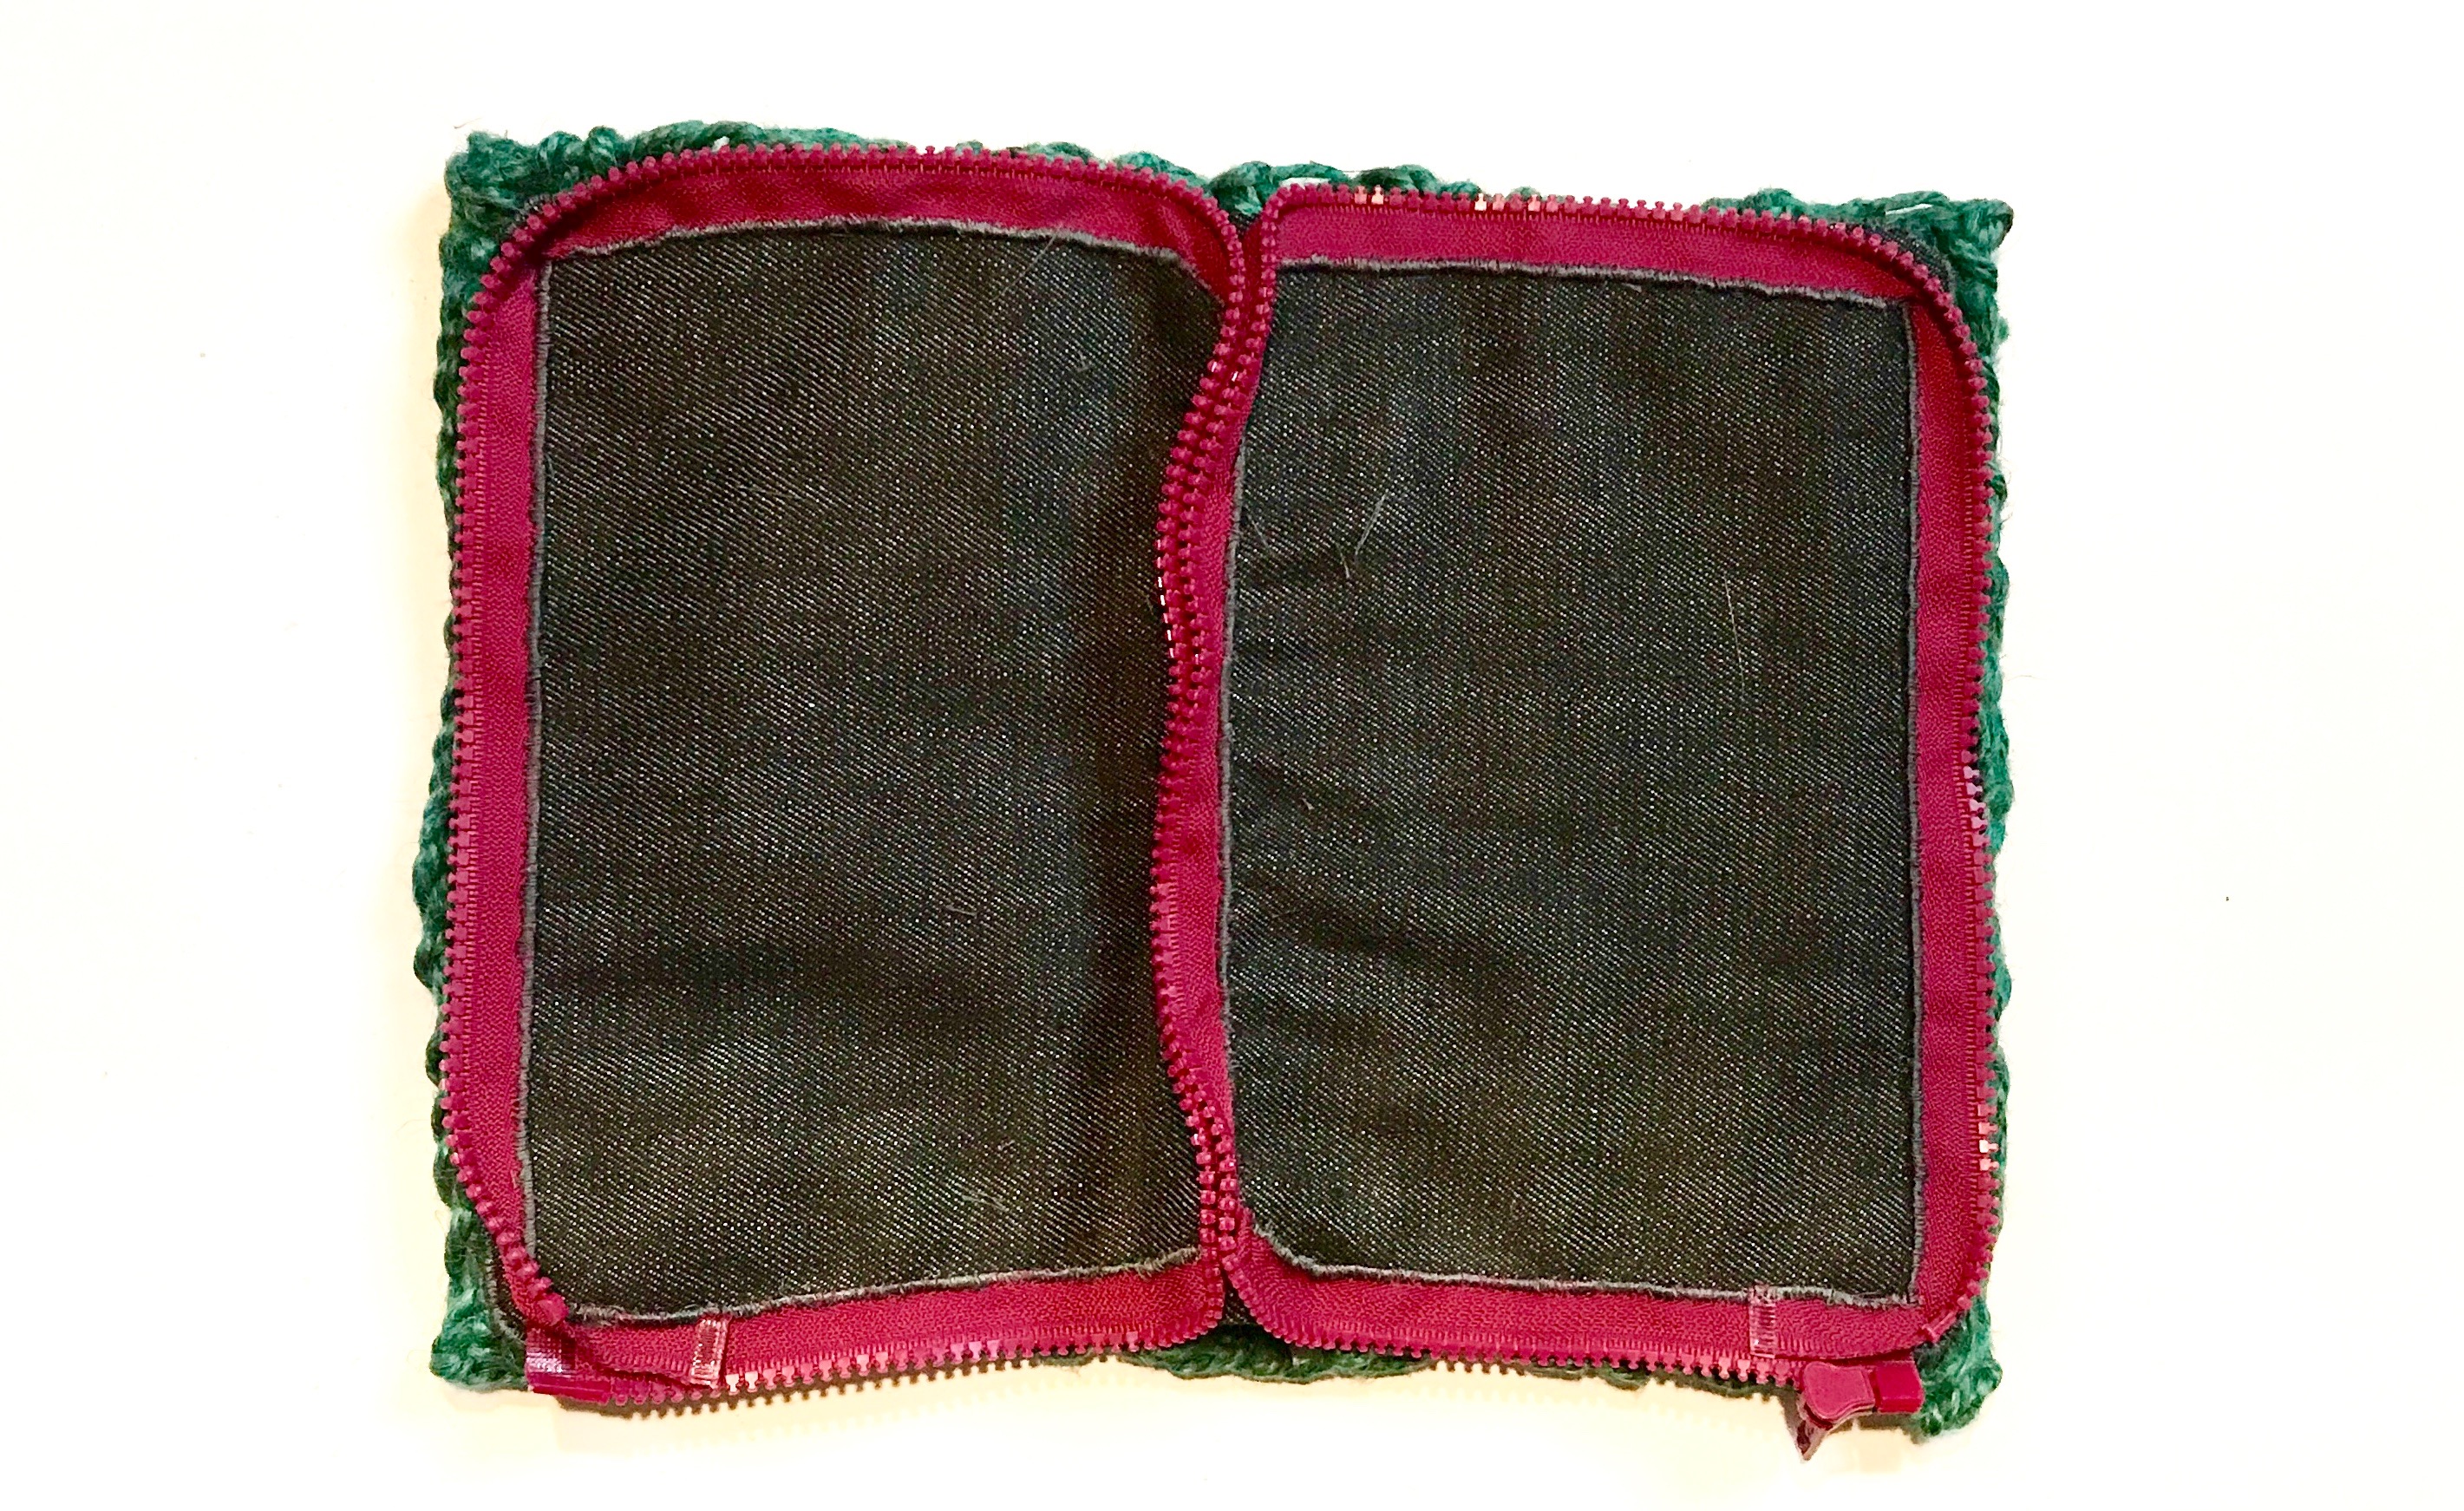 5 Twine handbag crochet denim lining fiskars and zipper sewn inside view myfixituplife